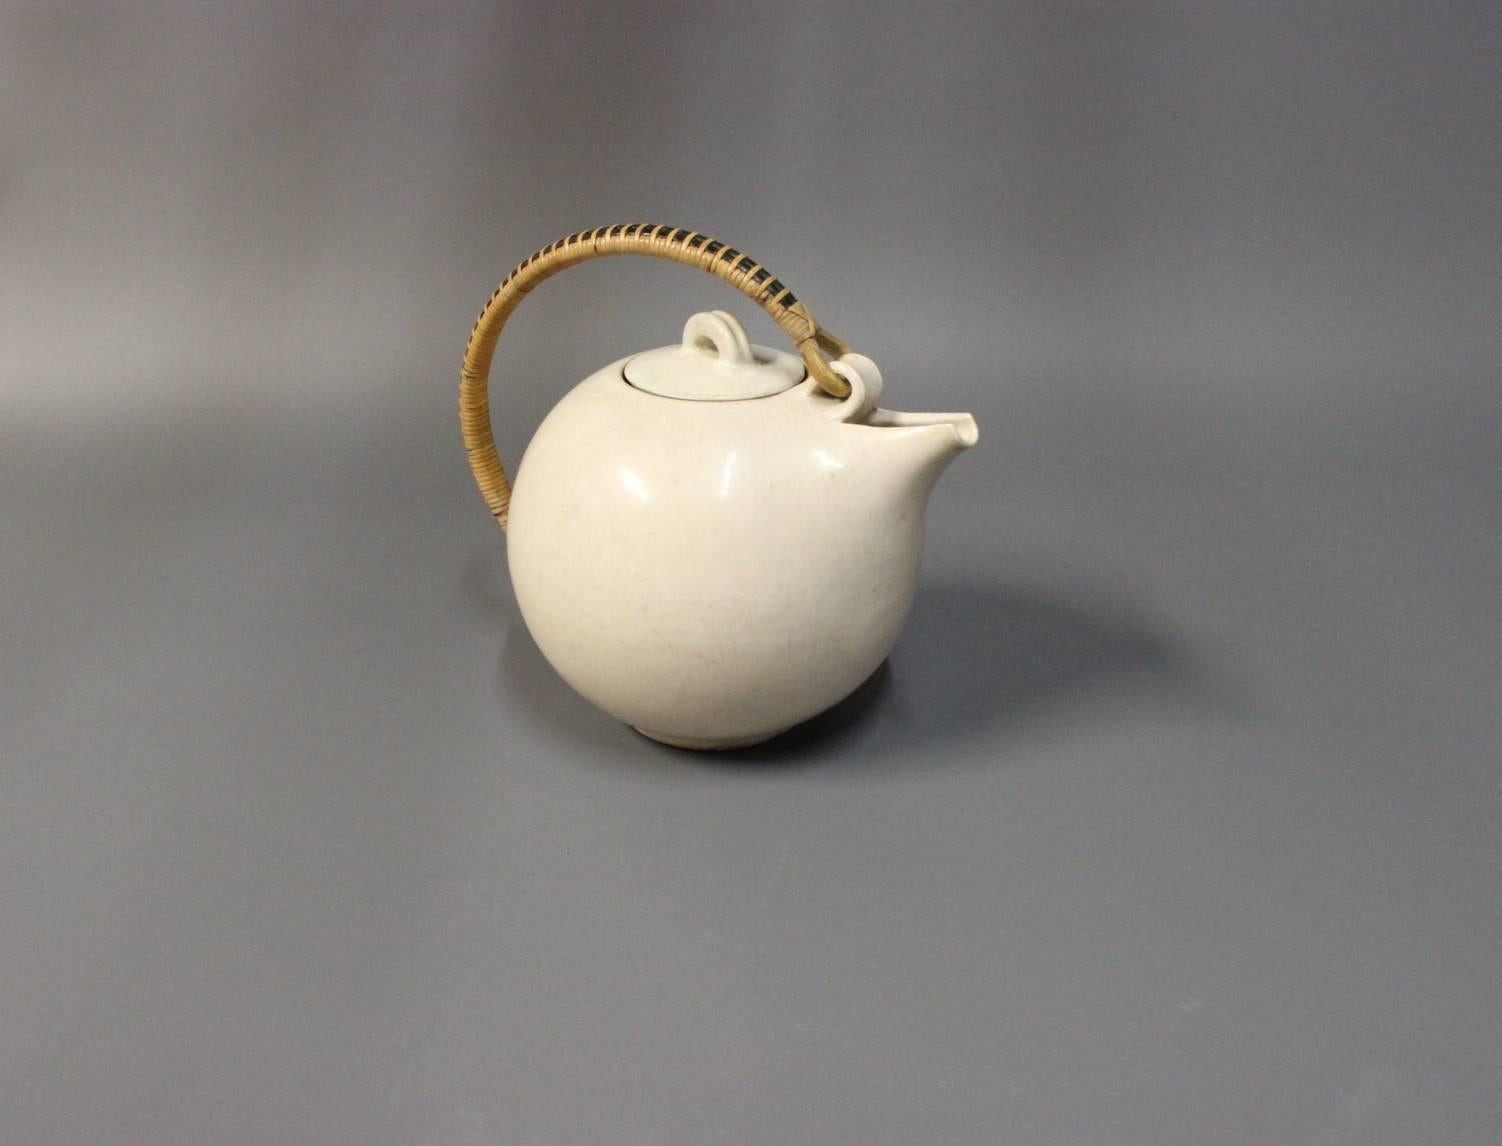 Scandinavian Modern White Glazed Saxbo Teapot with Bast Handle, No. 68, circa 1940s